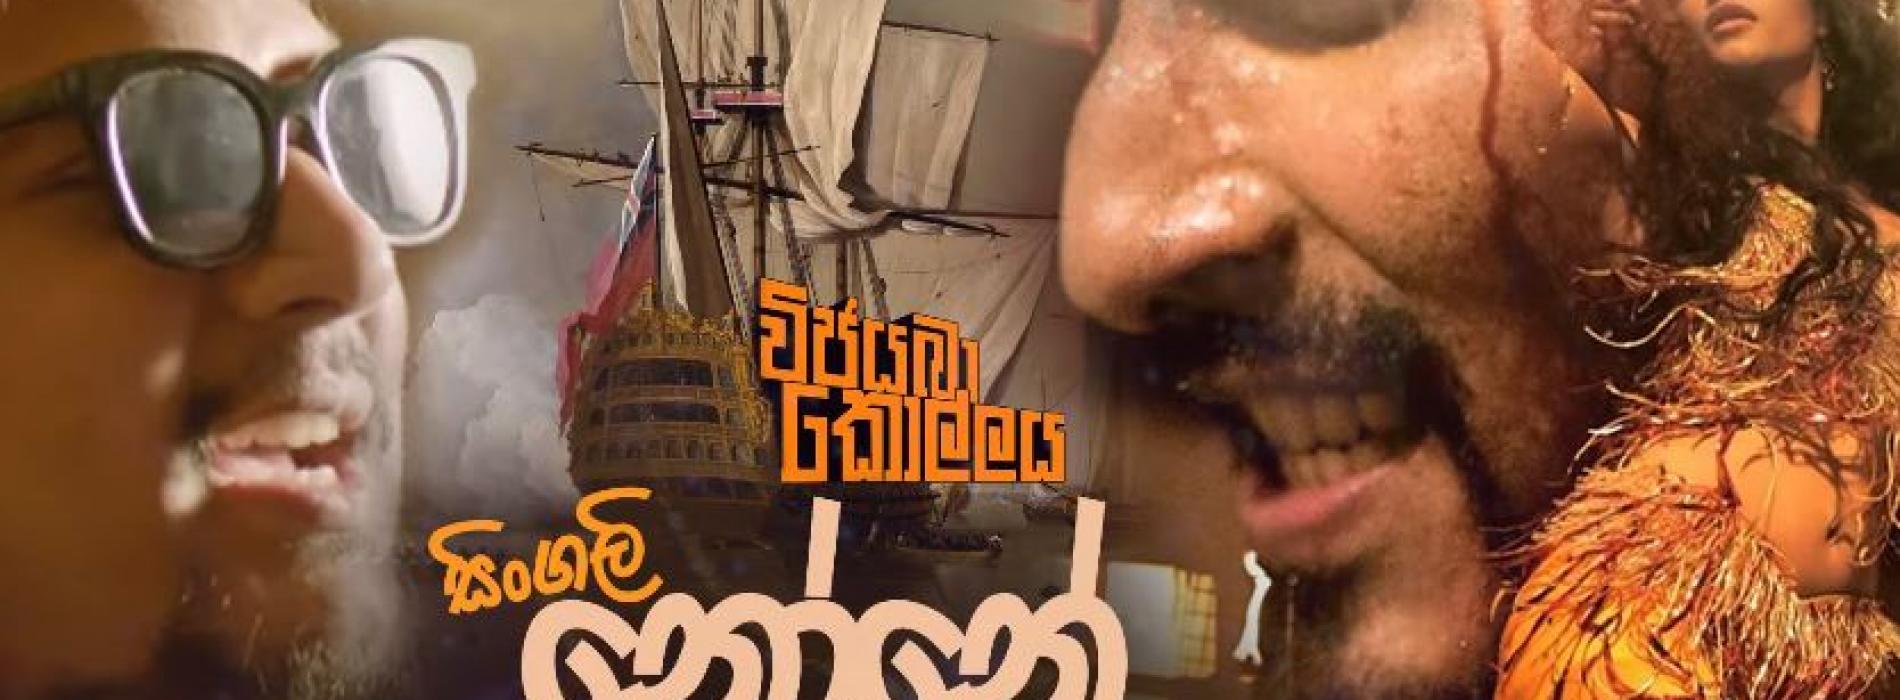 SANUKA – Singali None (සිංගලි නෝනේ) [Official Audio] | Vijayaba Kollaya Film Song